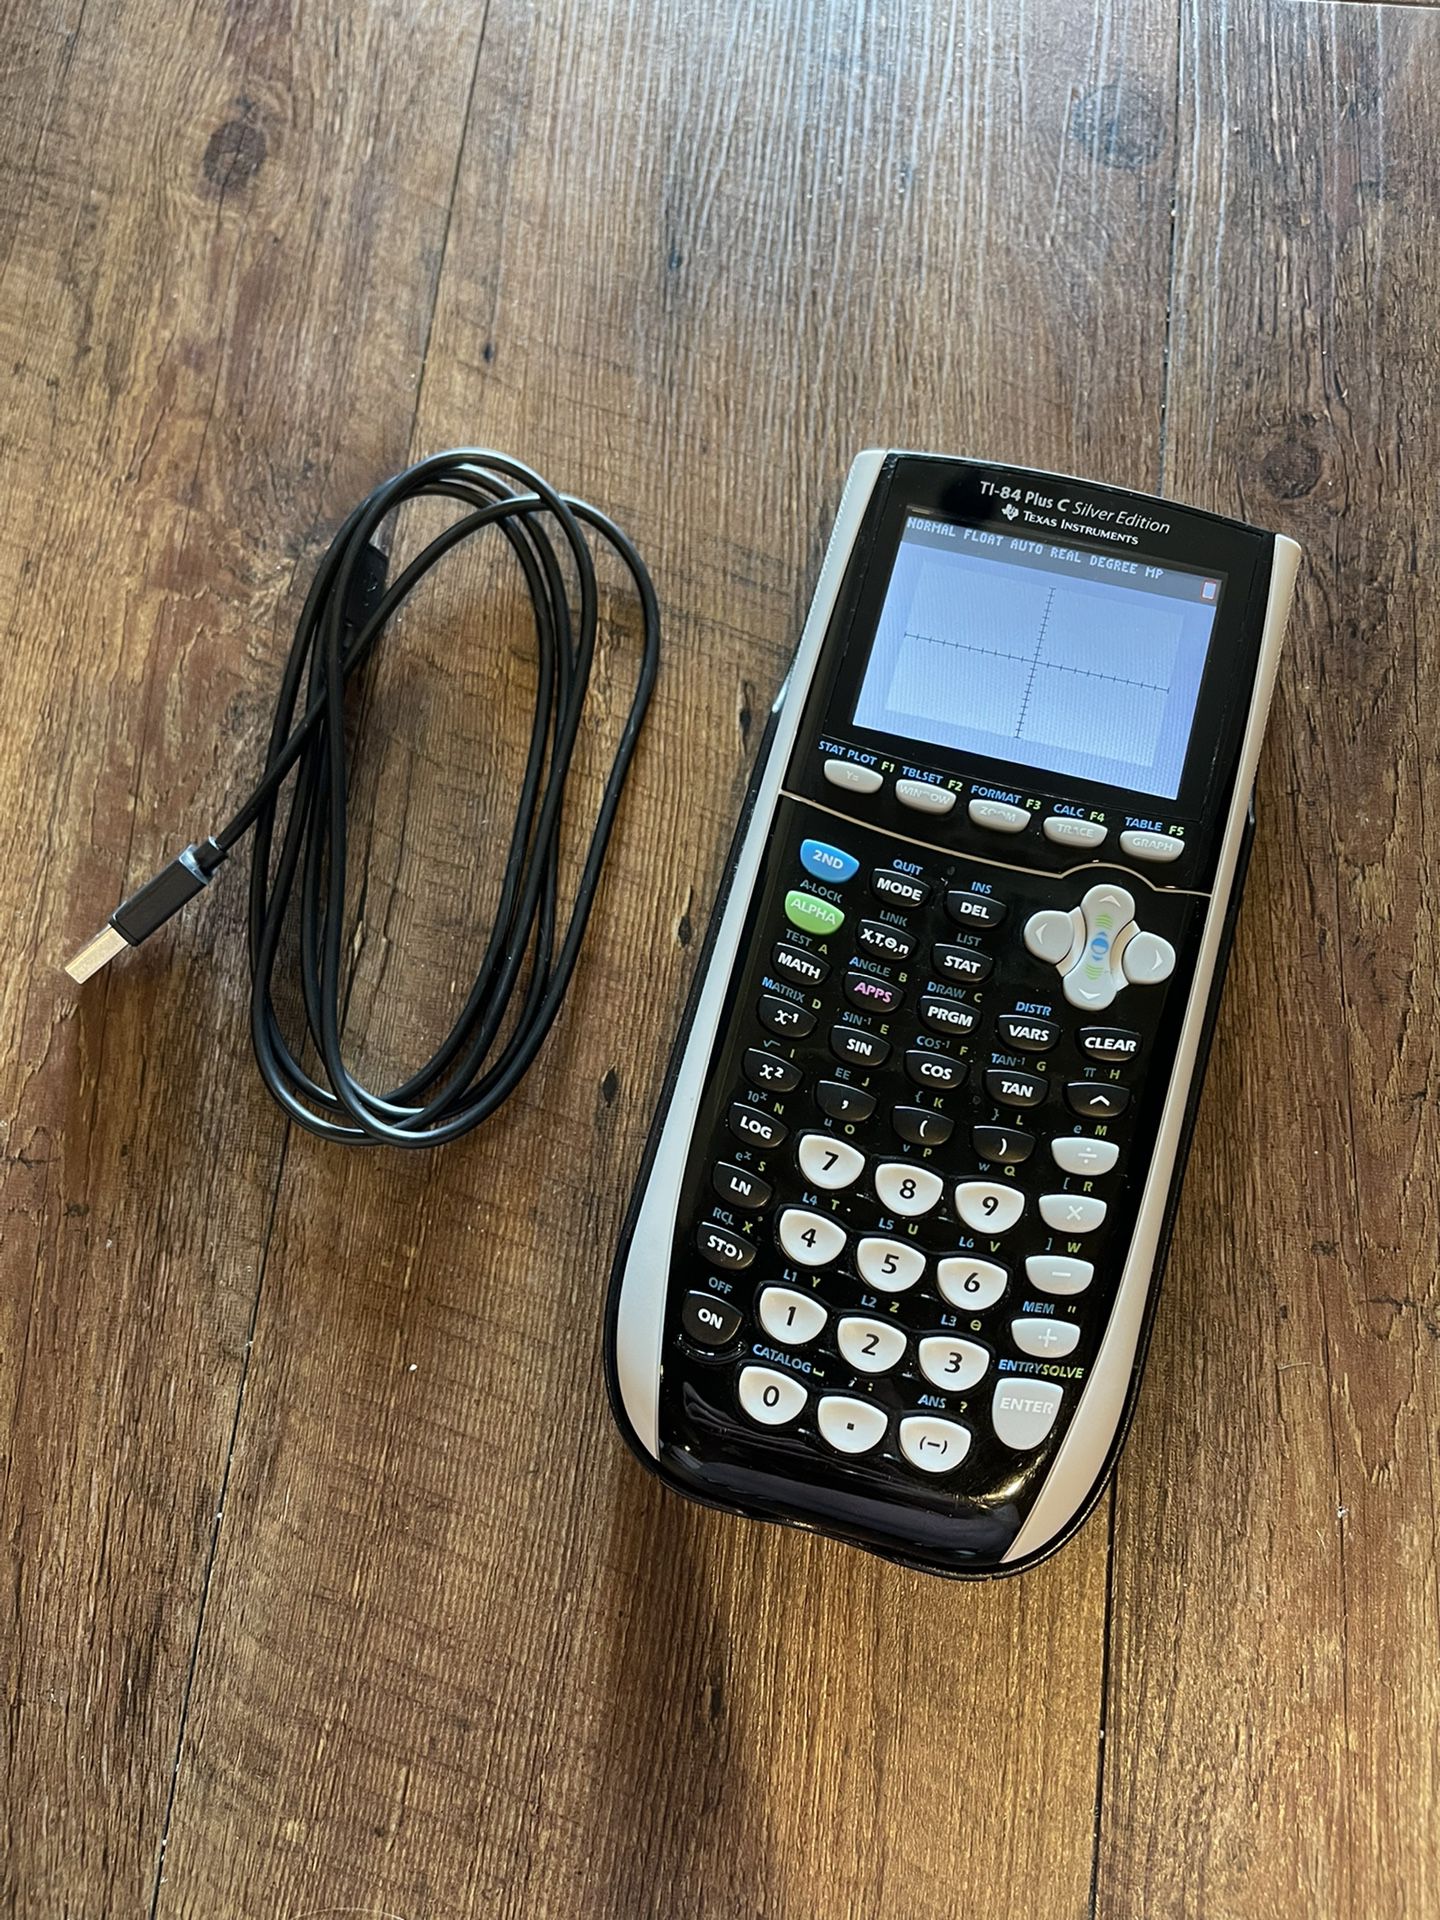 verkouden worden Acht hoofdstuk Ti-84 Plus C Silver Edition Calculator for Sale in College Station, TX -  OfferUp